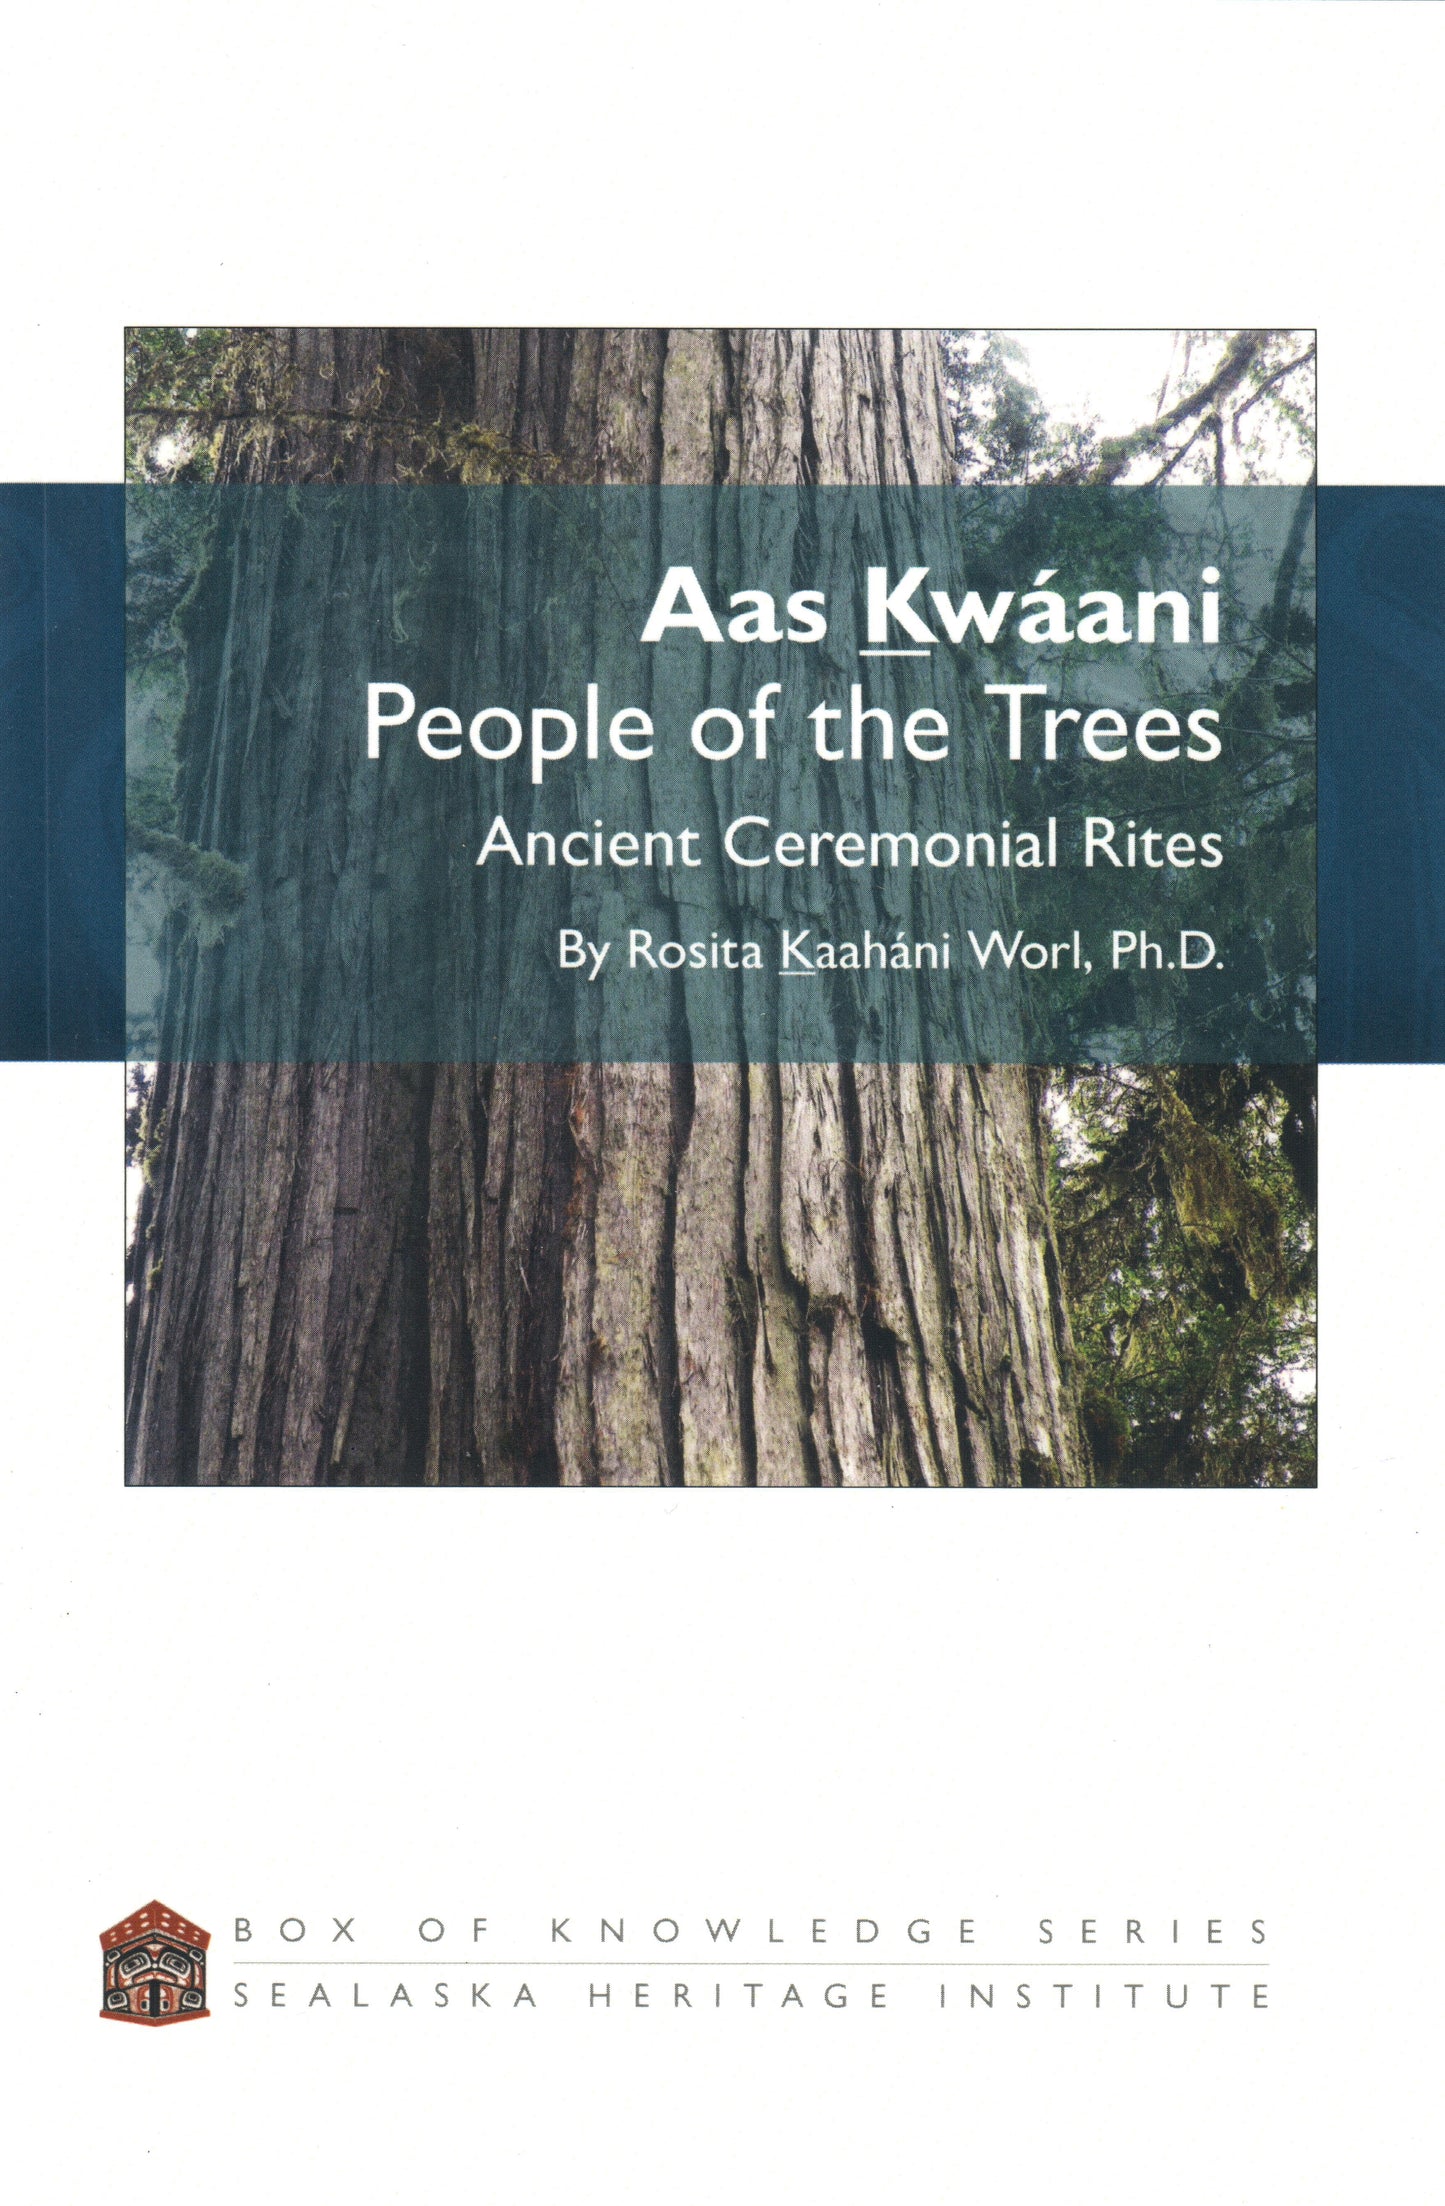 Book, BOK - “Aas Kwáani, People of the Trees, Ancient Ceremonial Rites"